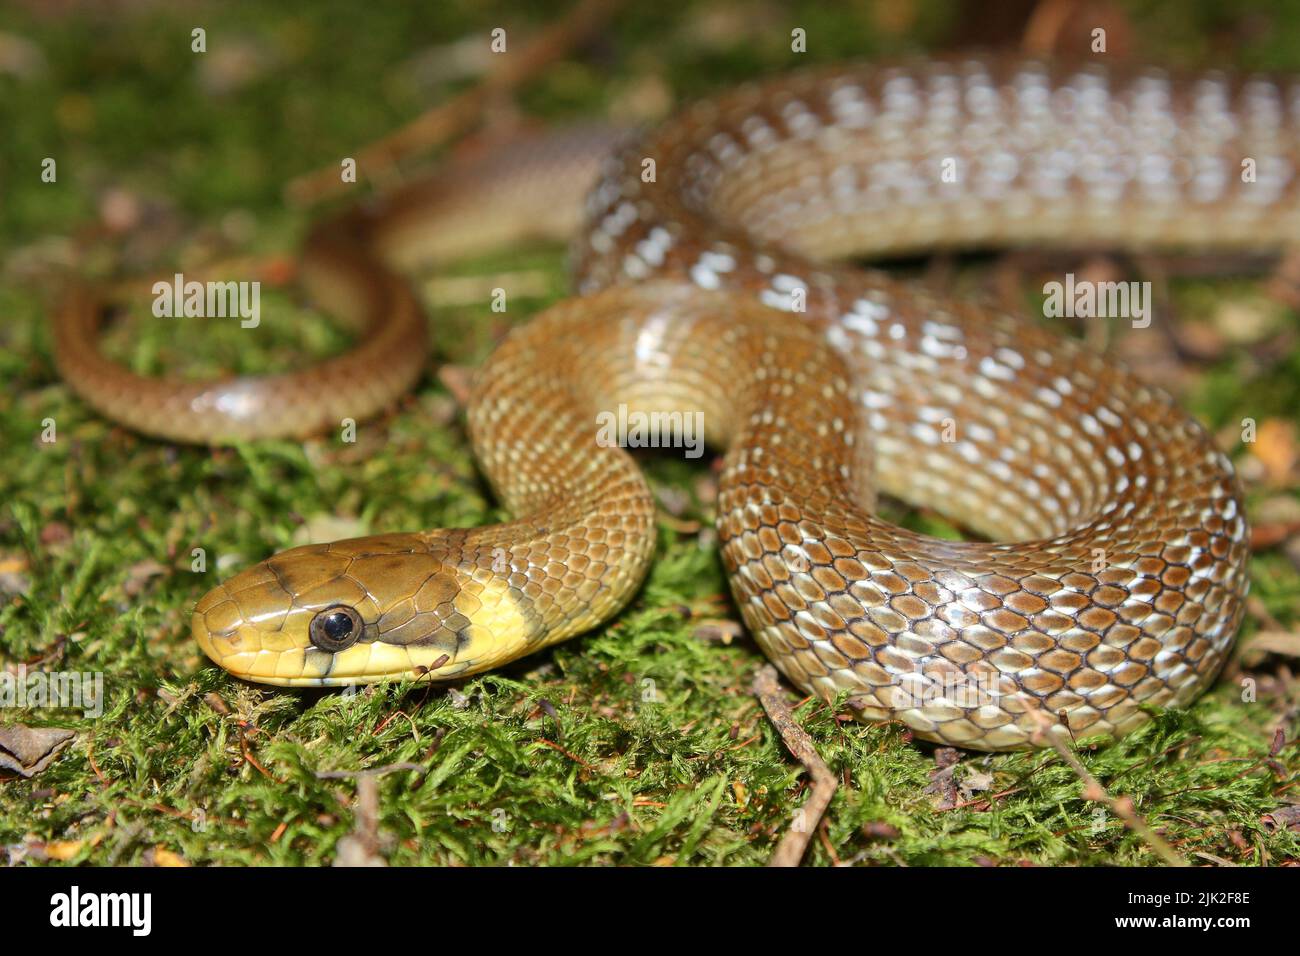 Aesculapian snake (Zamenis longissimus) in natural habitat Stock Photo